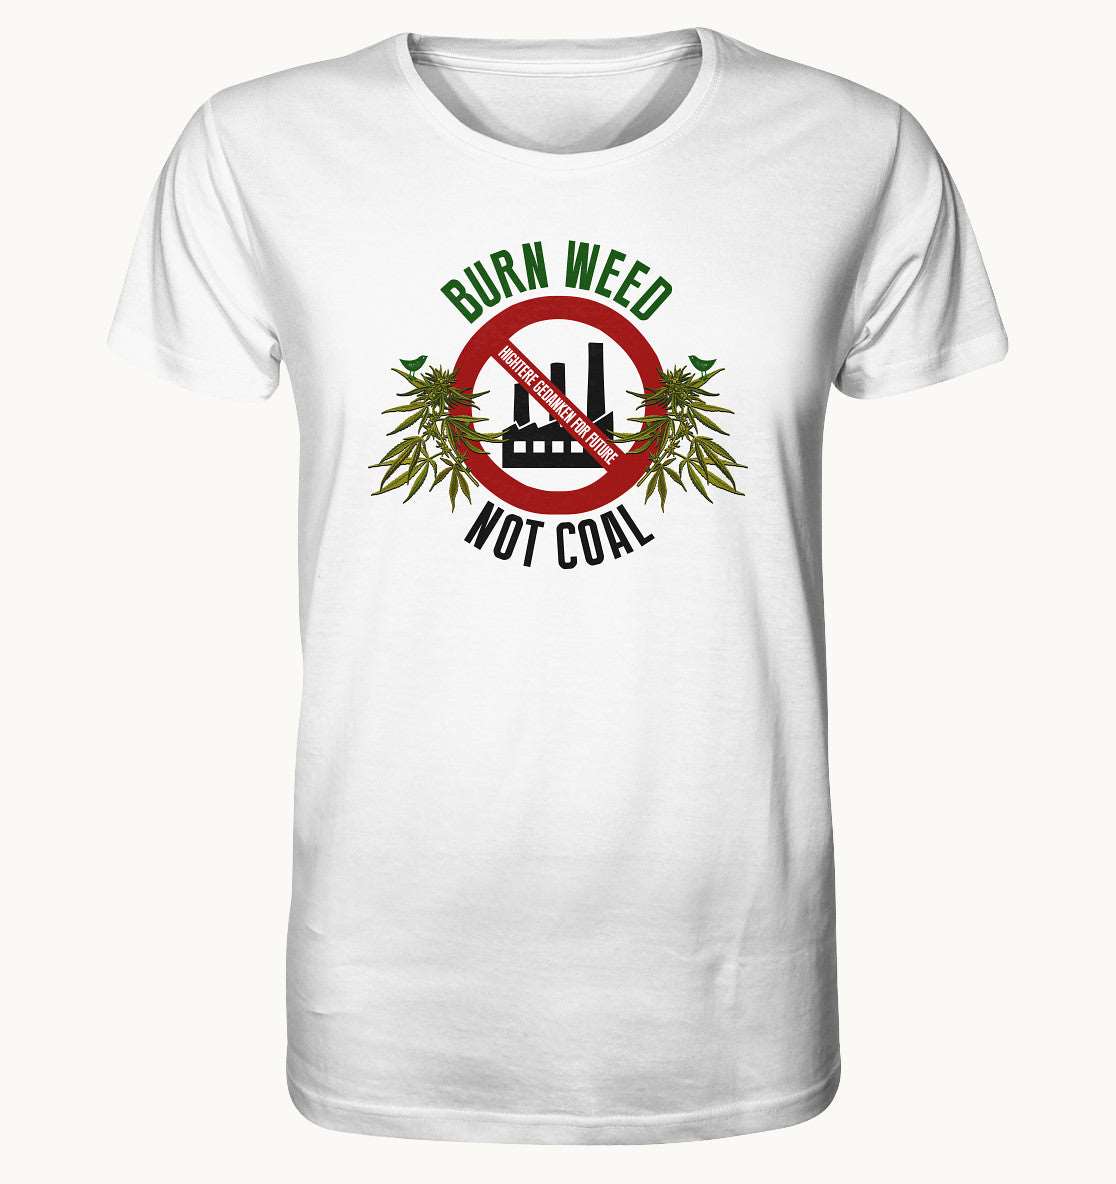 Burn weed not coal - Organic Shirt